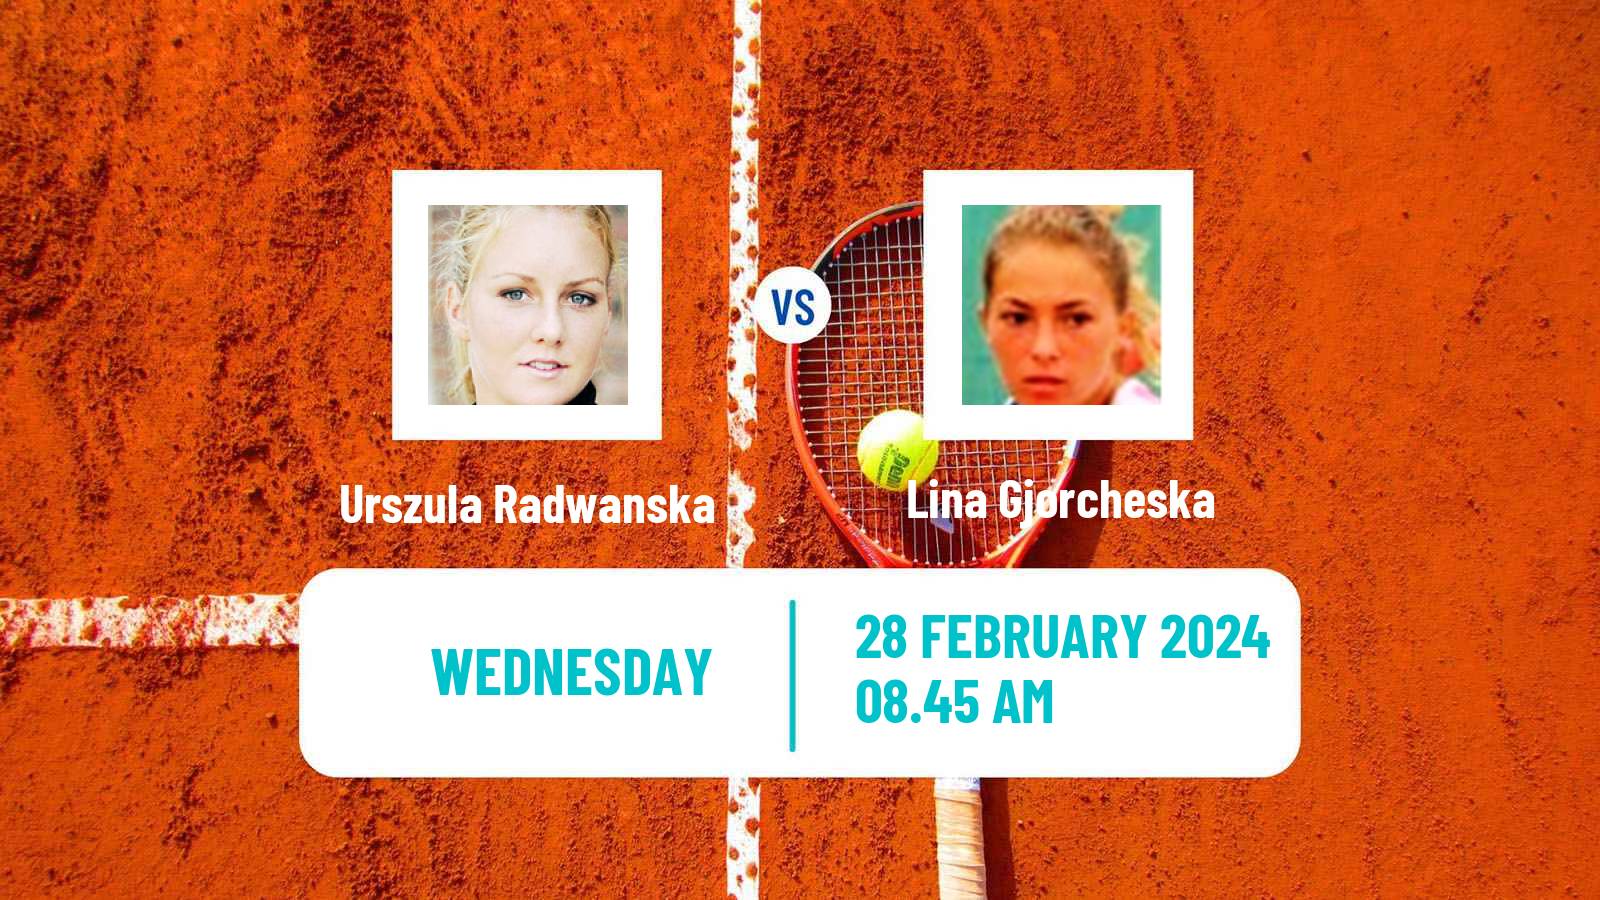 Tennis ITF W50 Trnava Women Urszula Radwanska - Lina Gjorcheska